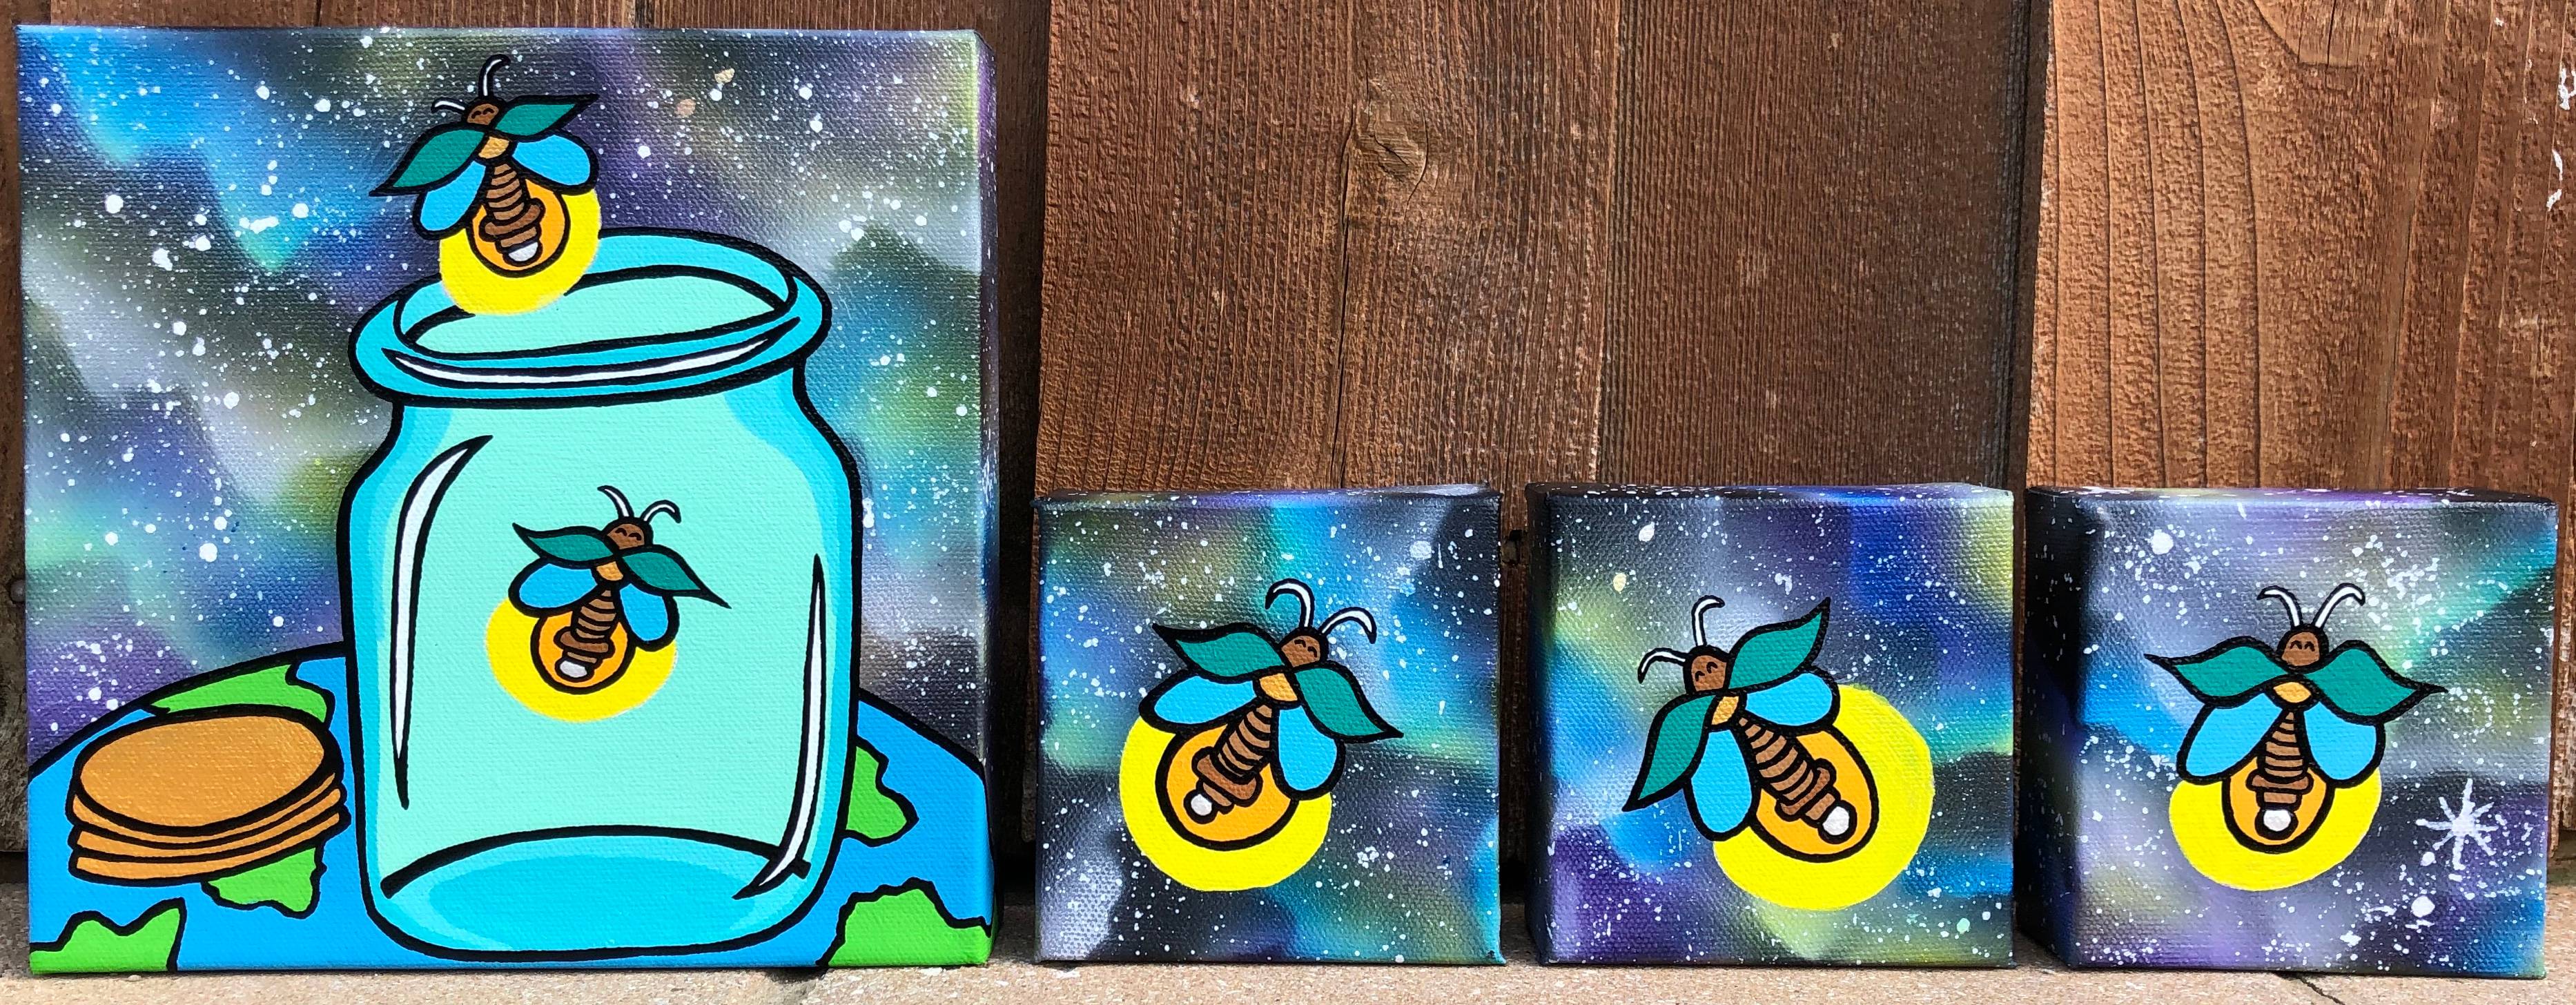 Fireflies in Space!